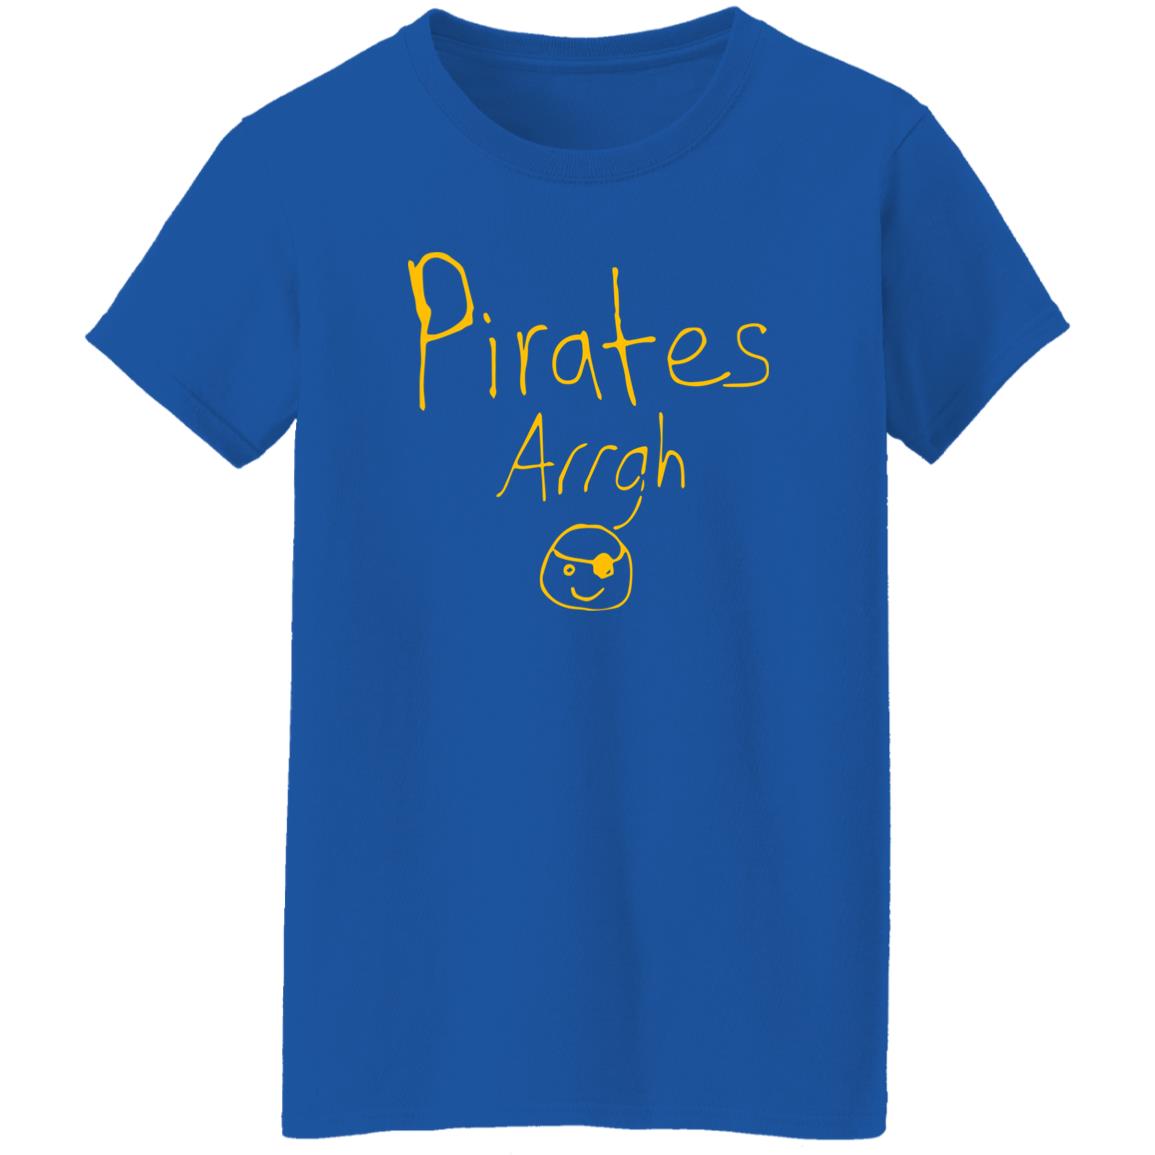 Michael Chavis Pittsburgh Clothing Company Merch Pirates Arrgh Shirt